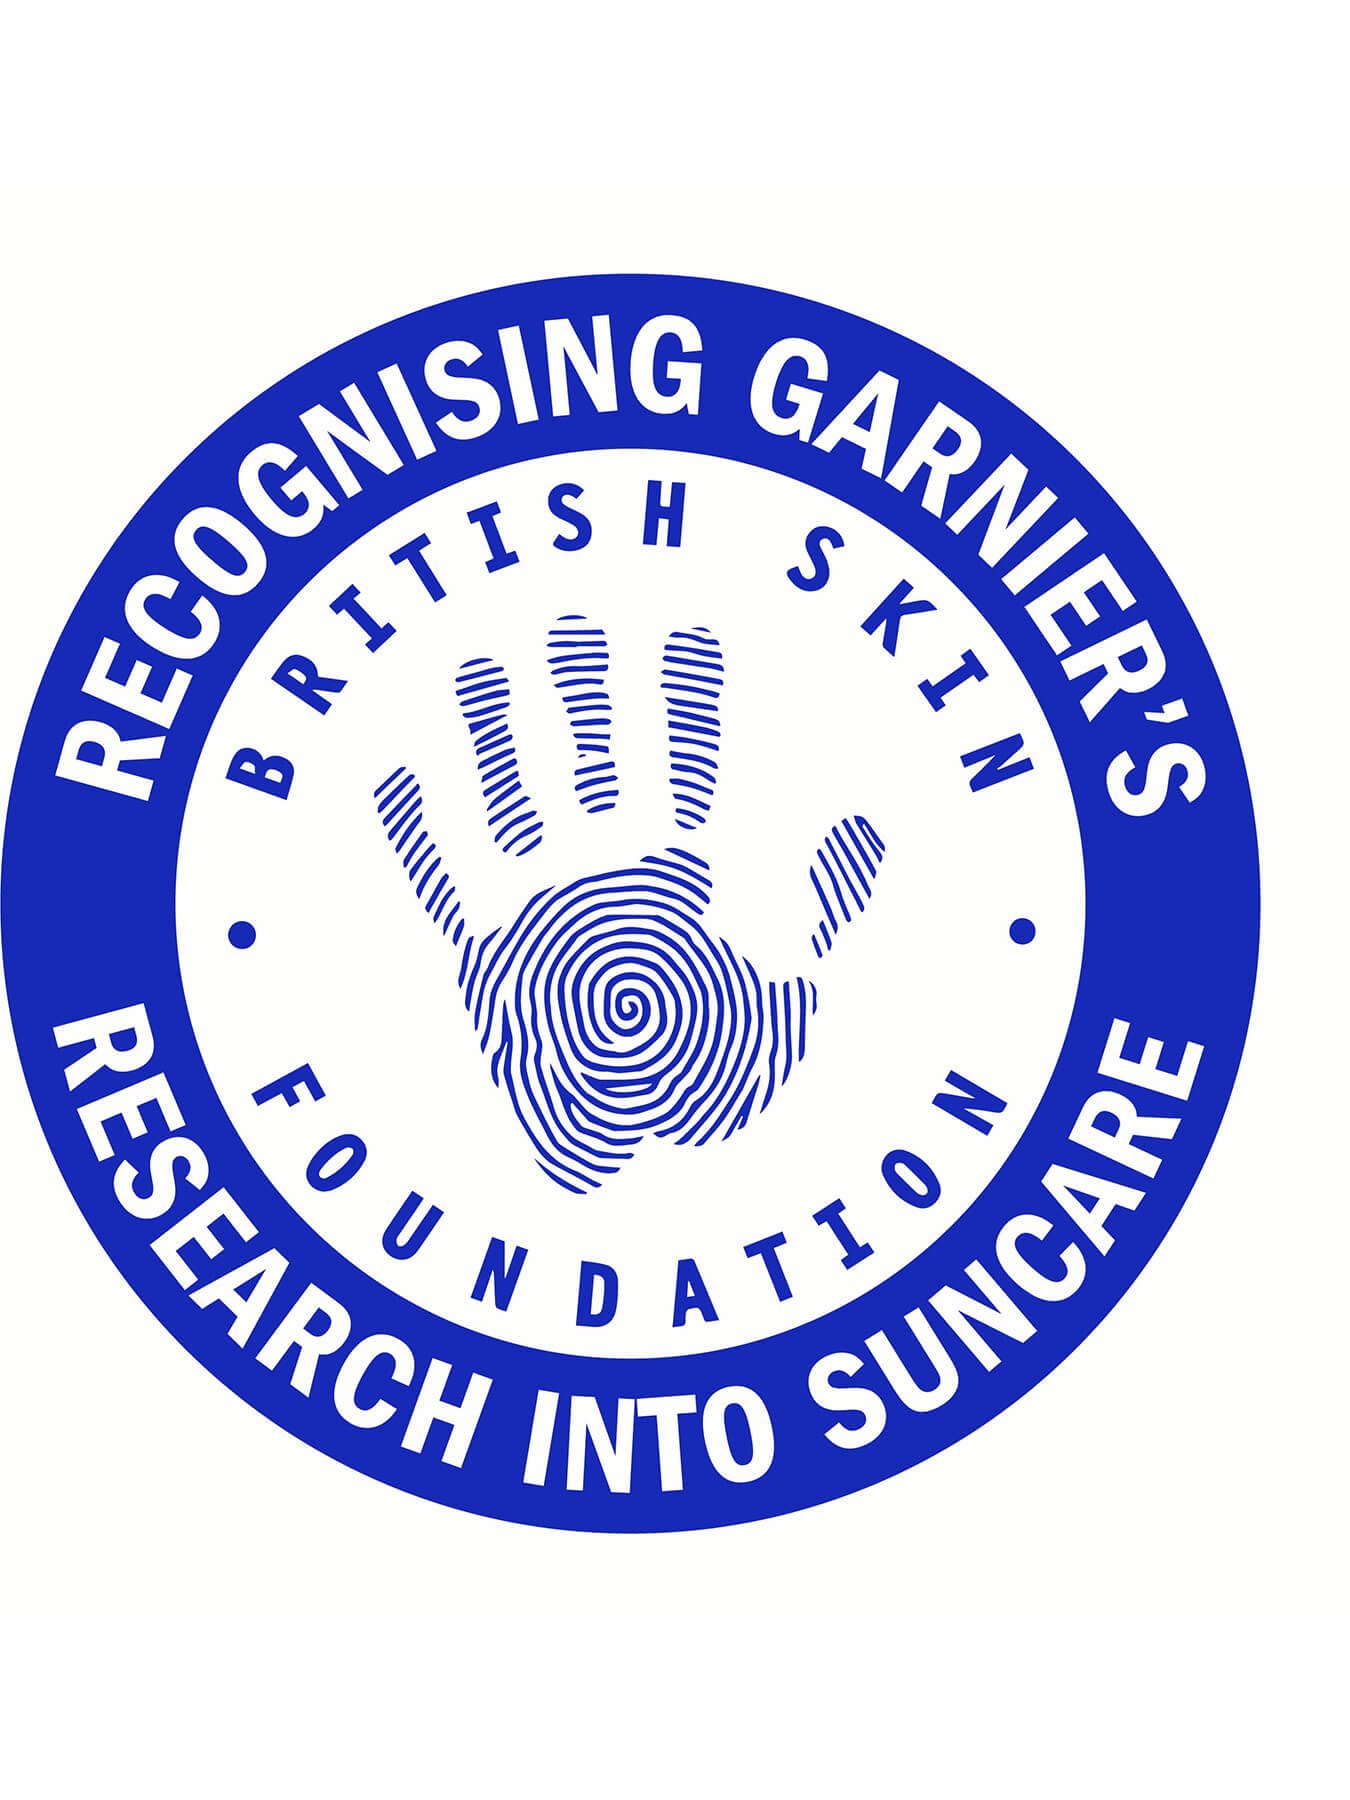 recognising garnier's research into suncare | british skin foundation logo